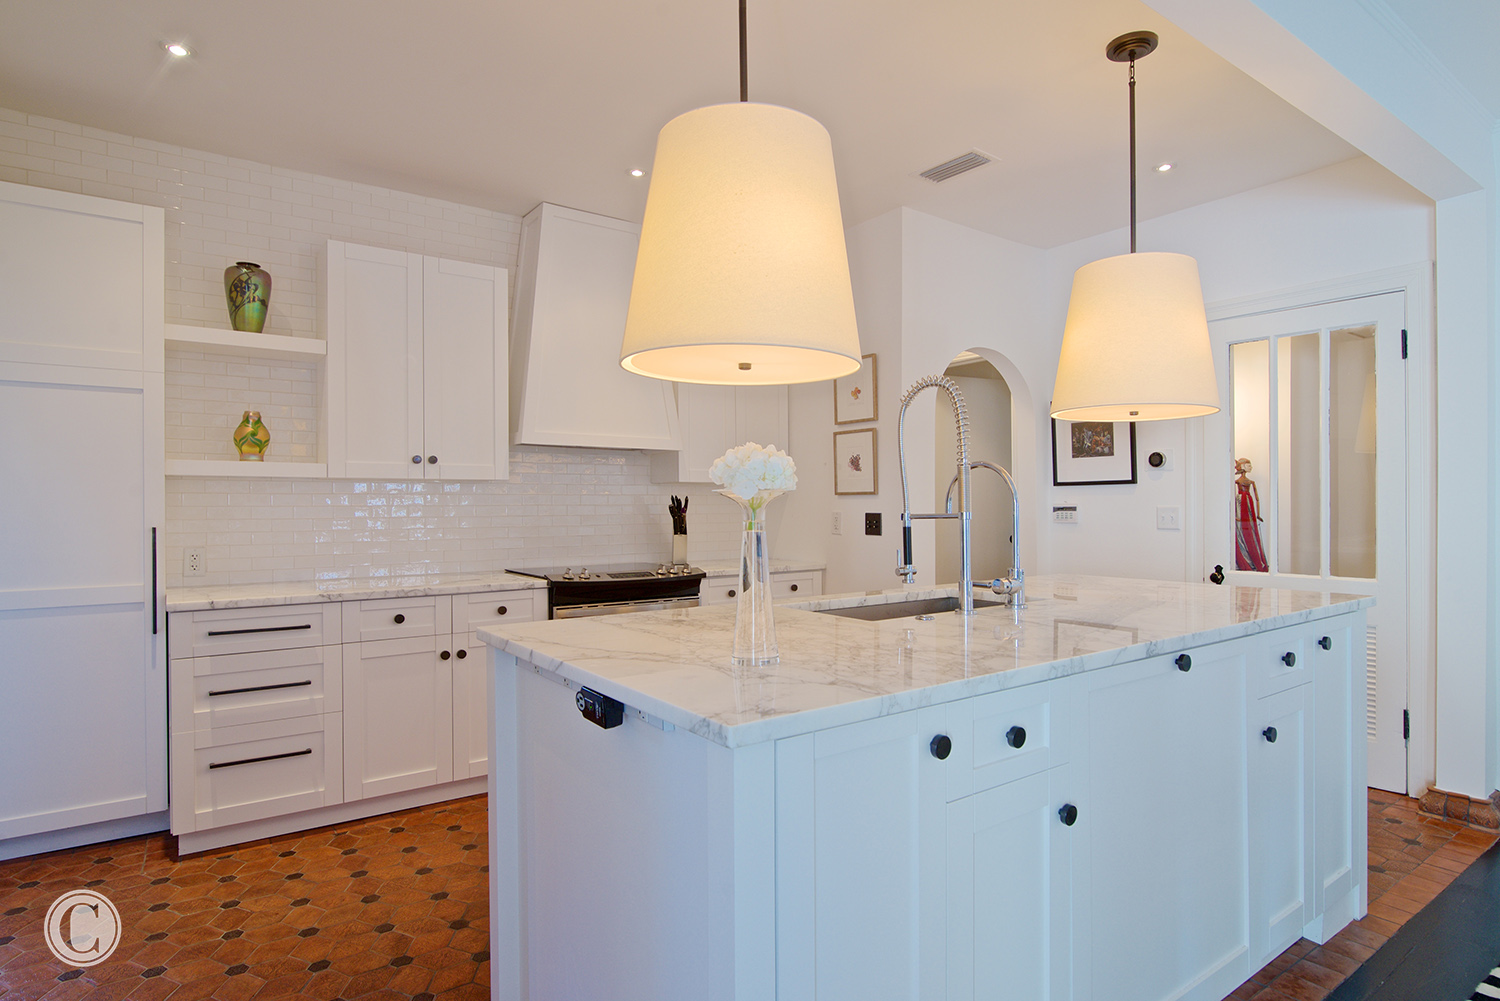 Kitchen, , Home renovation, San Marco, Jacksonville, FL - ©Wally Sears Photography